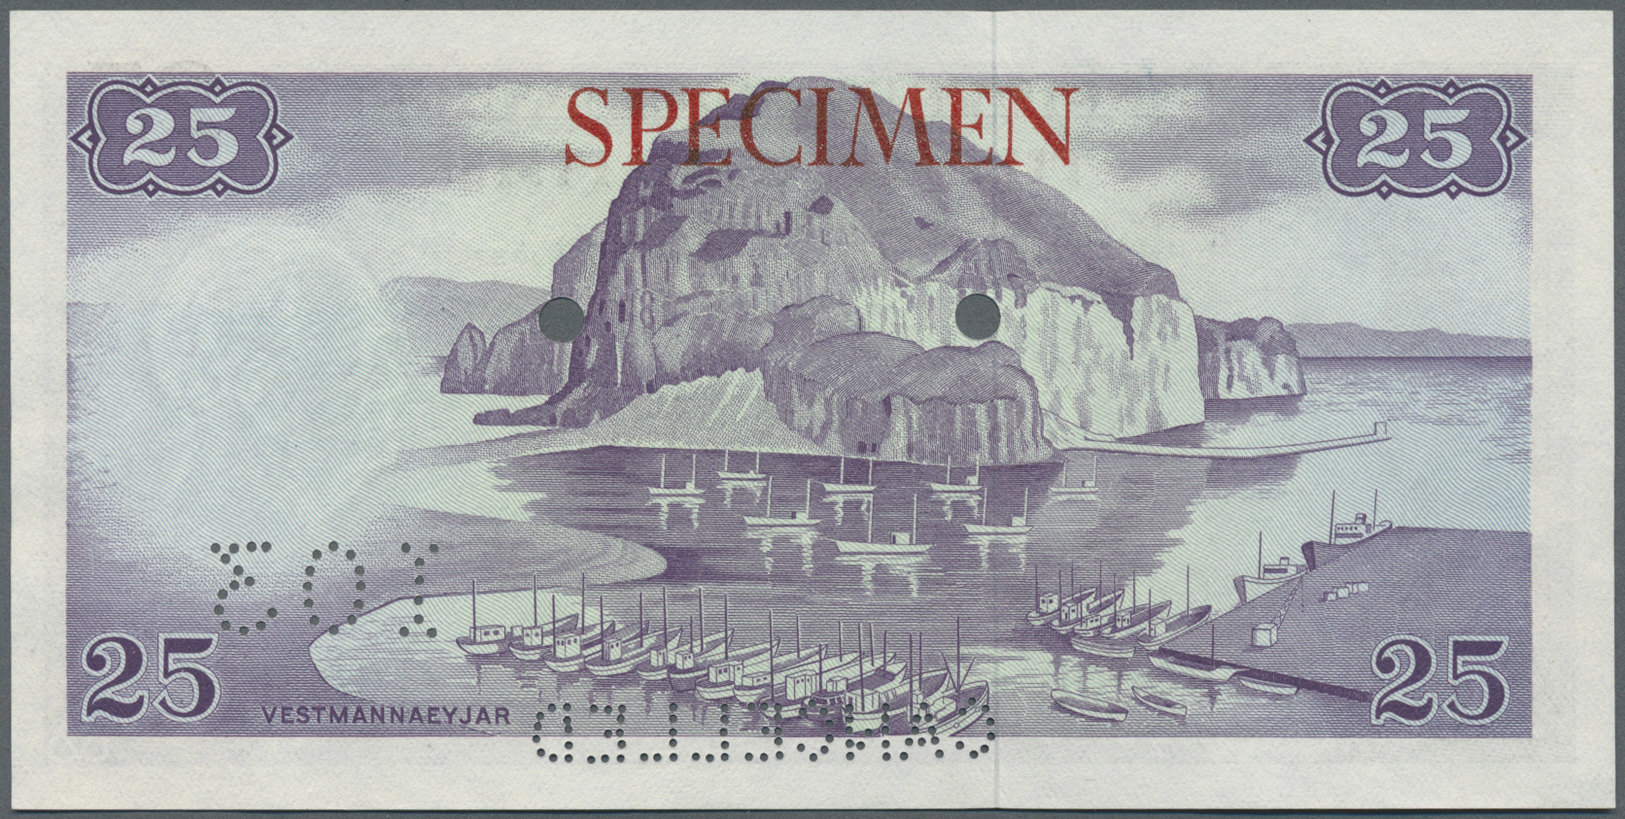 01027 Iceland / Island: 25 Kronur 1957 Specimen P. 39s, Red Specimen Overprint, Cancellation Hole, "Cancelled" Perforati - Islanda